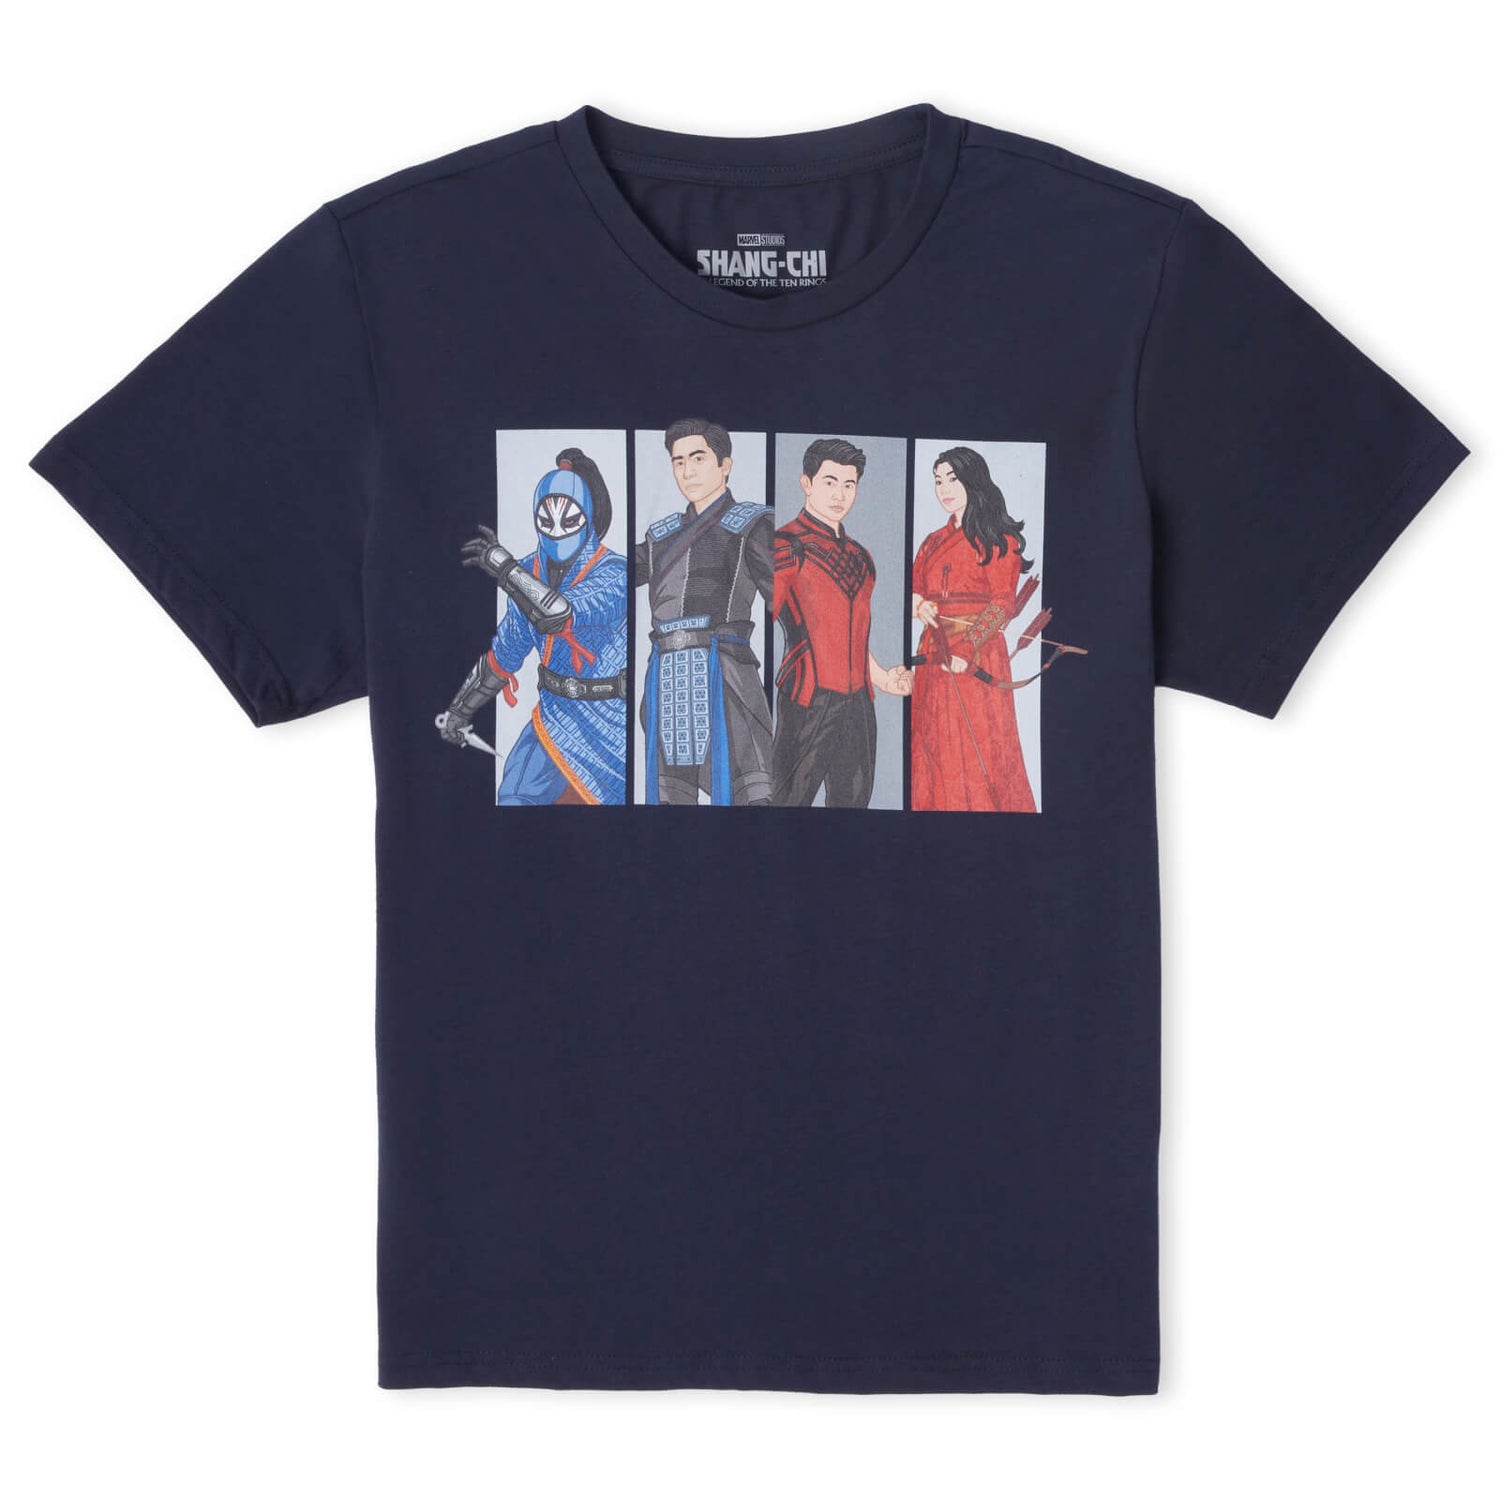 Camiseta para hombre de Shang-Chi Group Pose - Azul marino